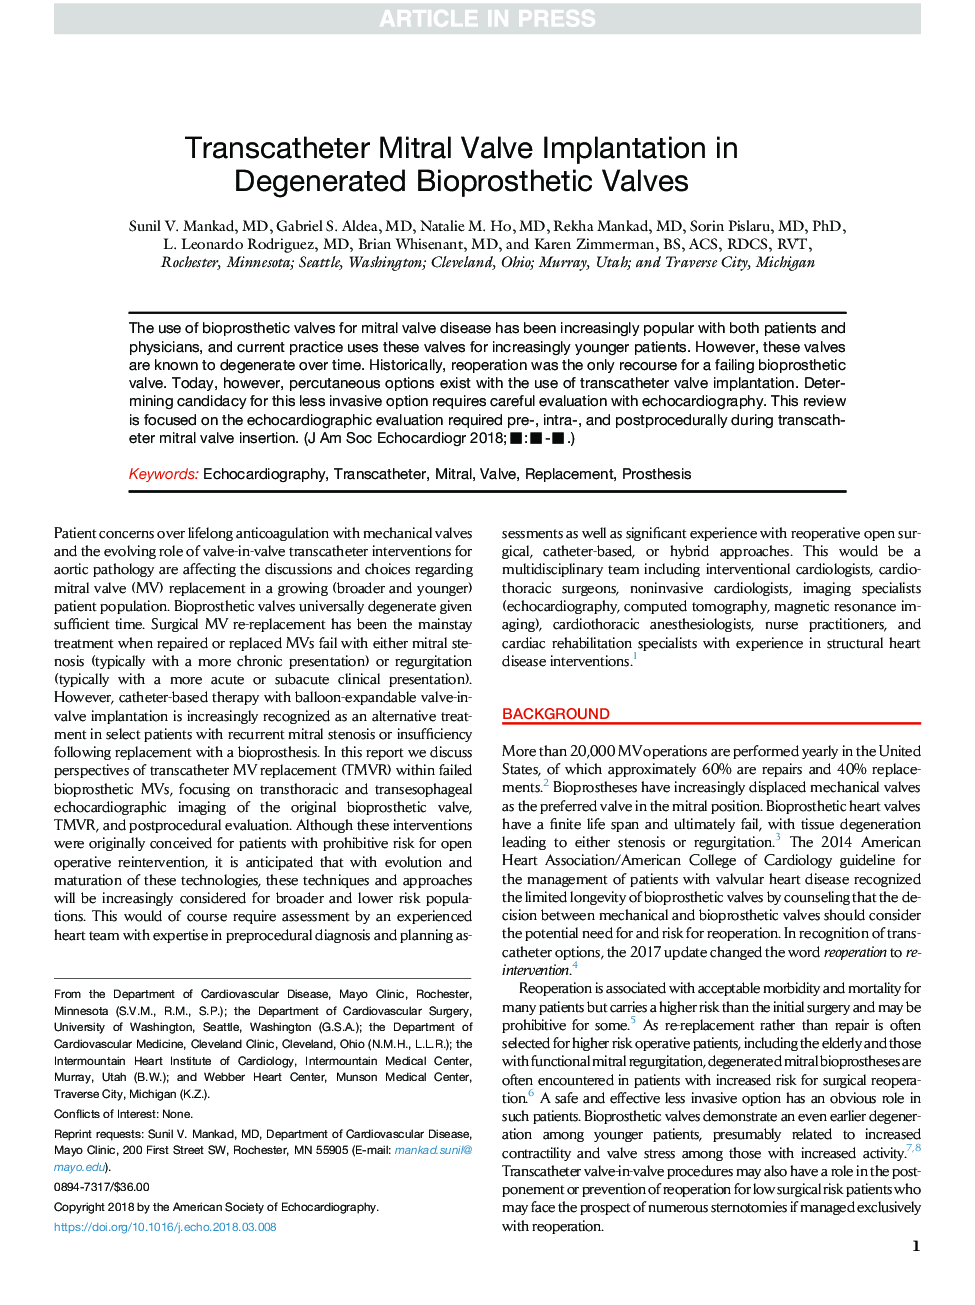 Transcatheter Mitral Valve Implantation in Degenerated Bioprosthetic Valves